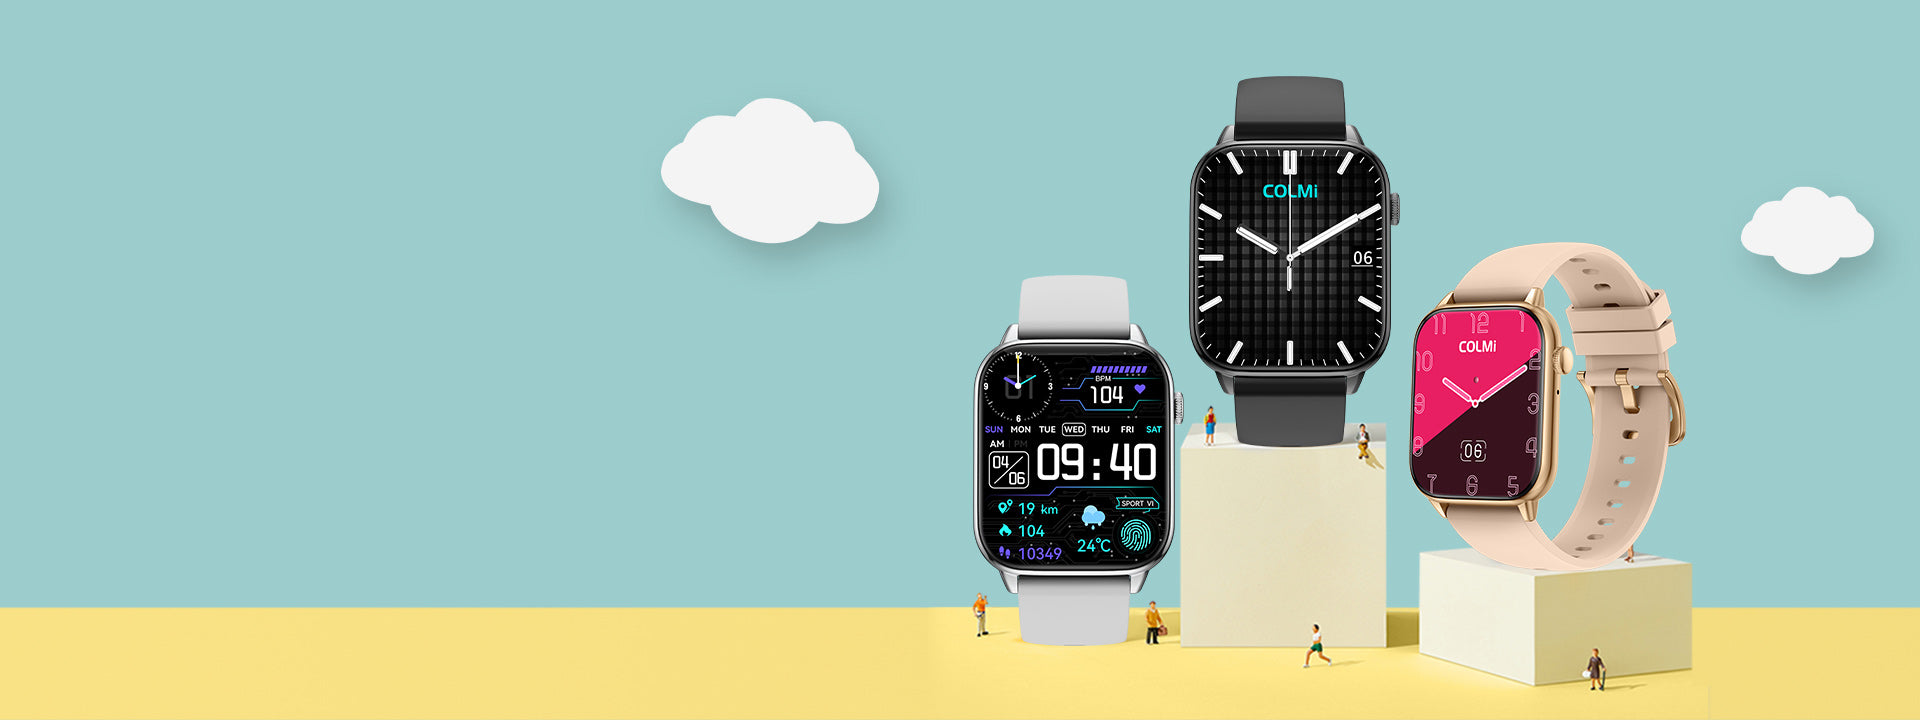 Smart-Watch-C60-Appearance-Design-(1)